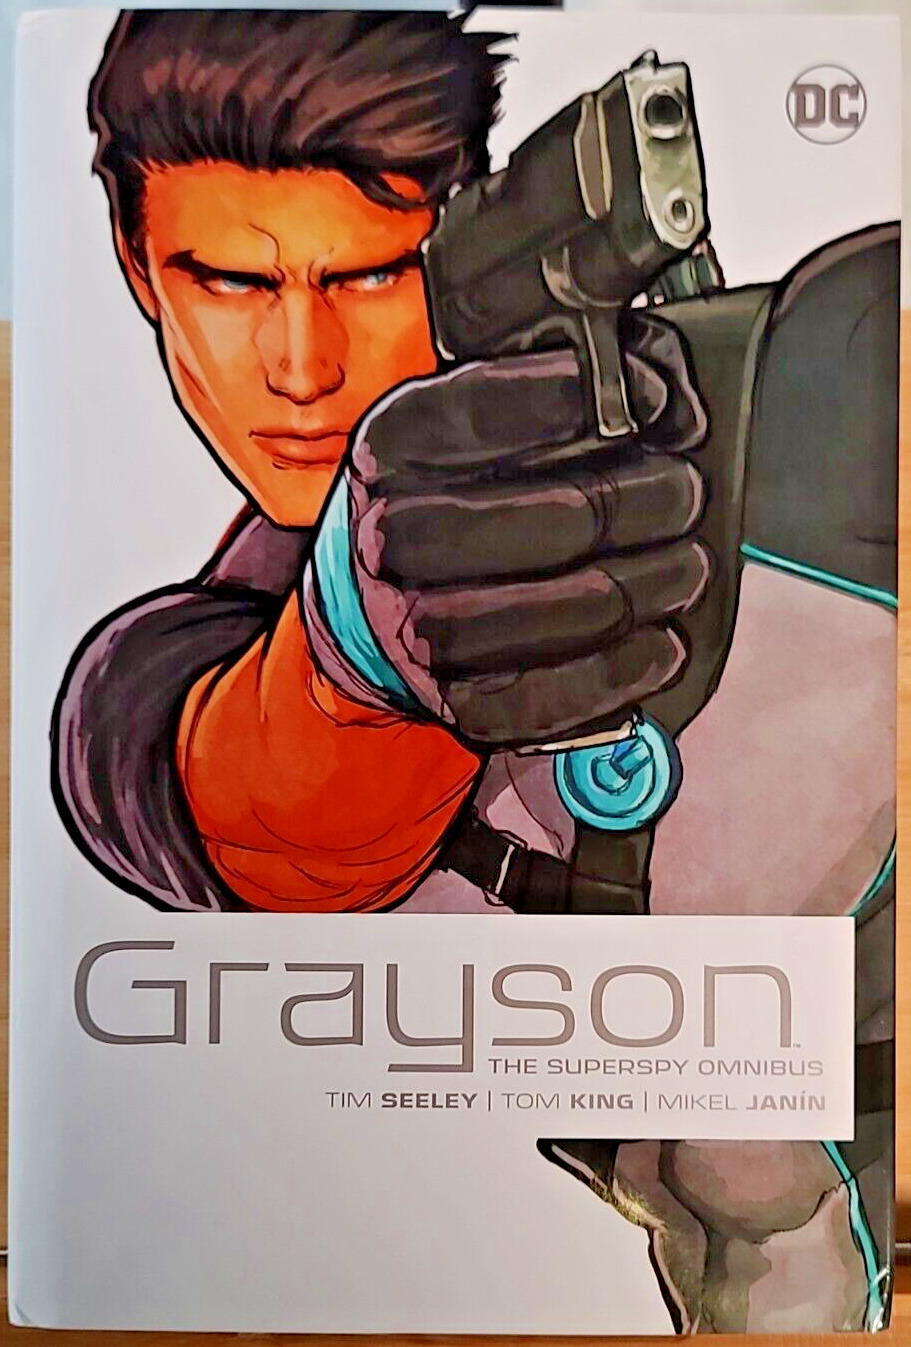 Grayson the Superspy Omnibus (DC Comics, October 2019)